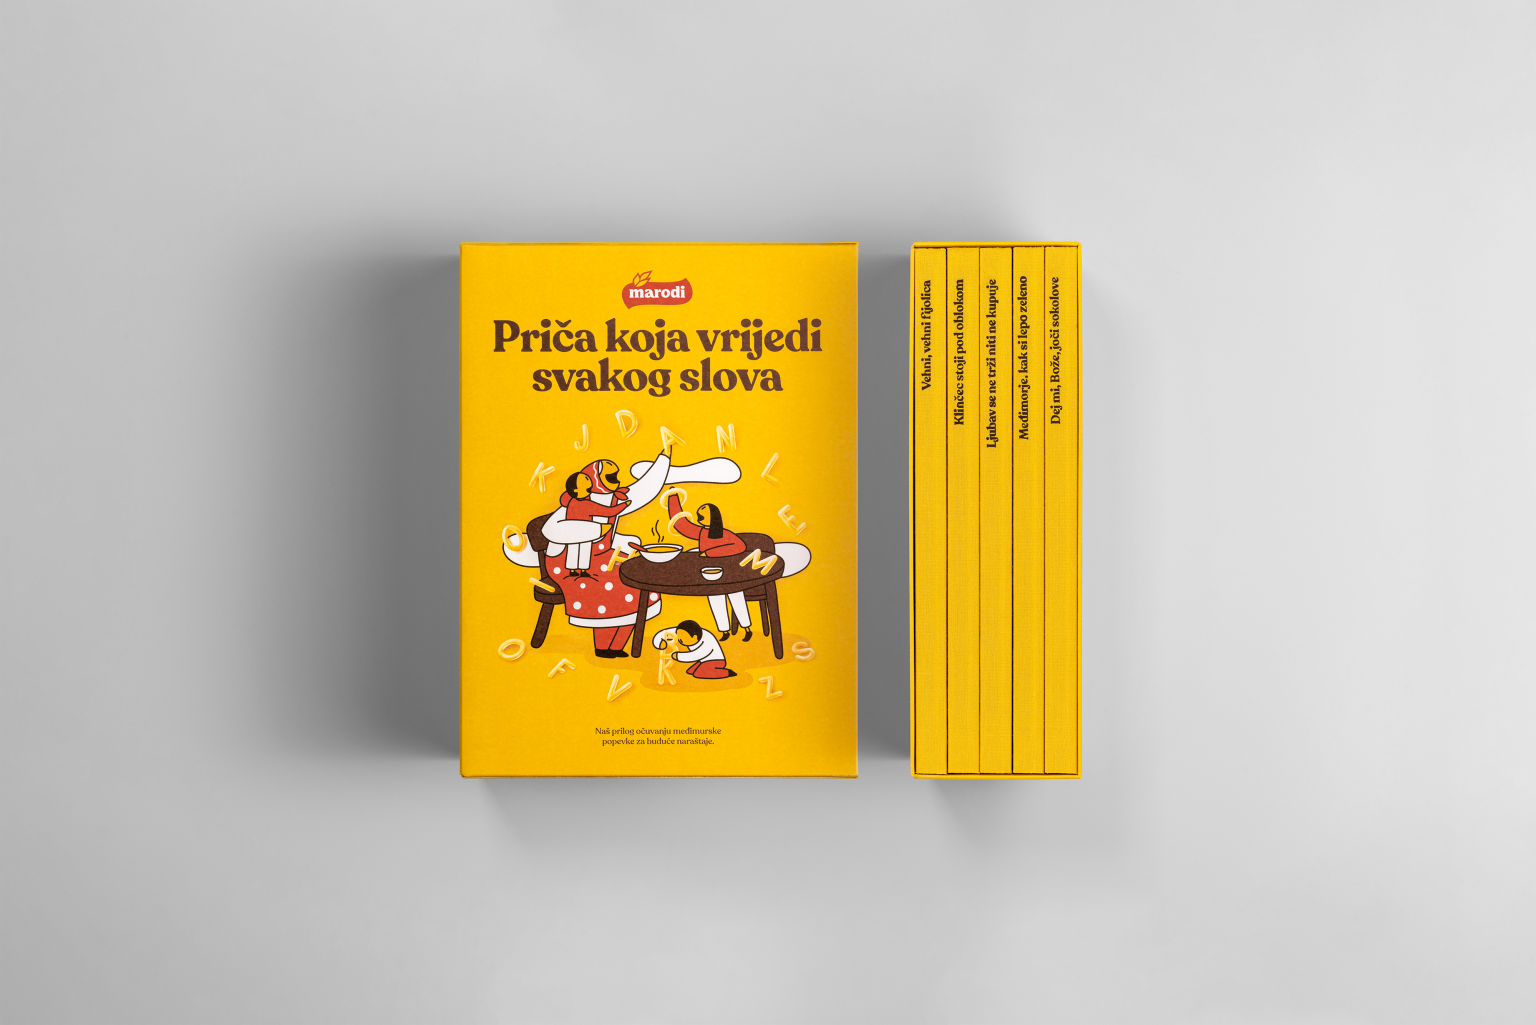 Marodi pasta and Međimurje folksongs book 
